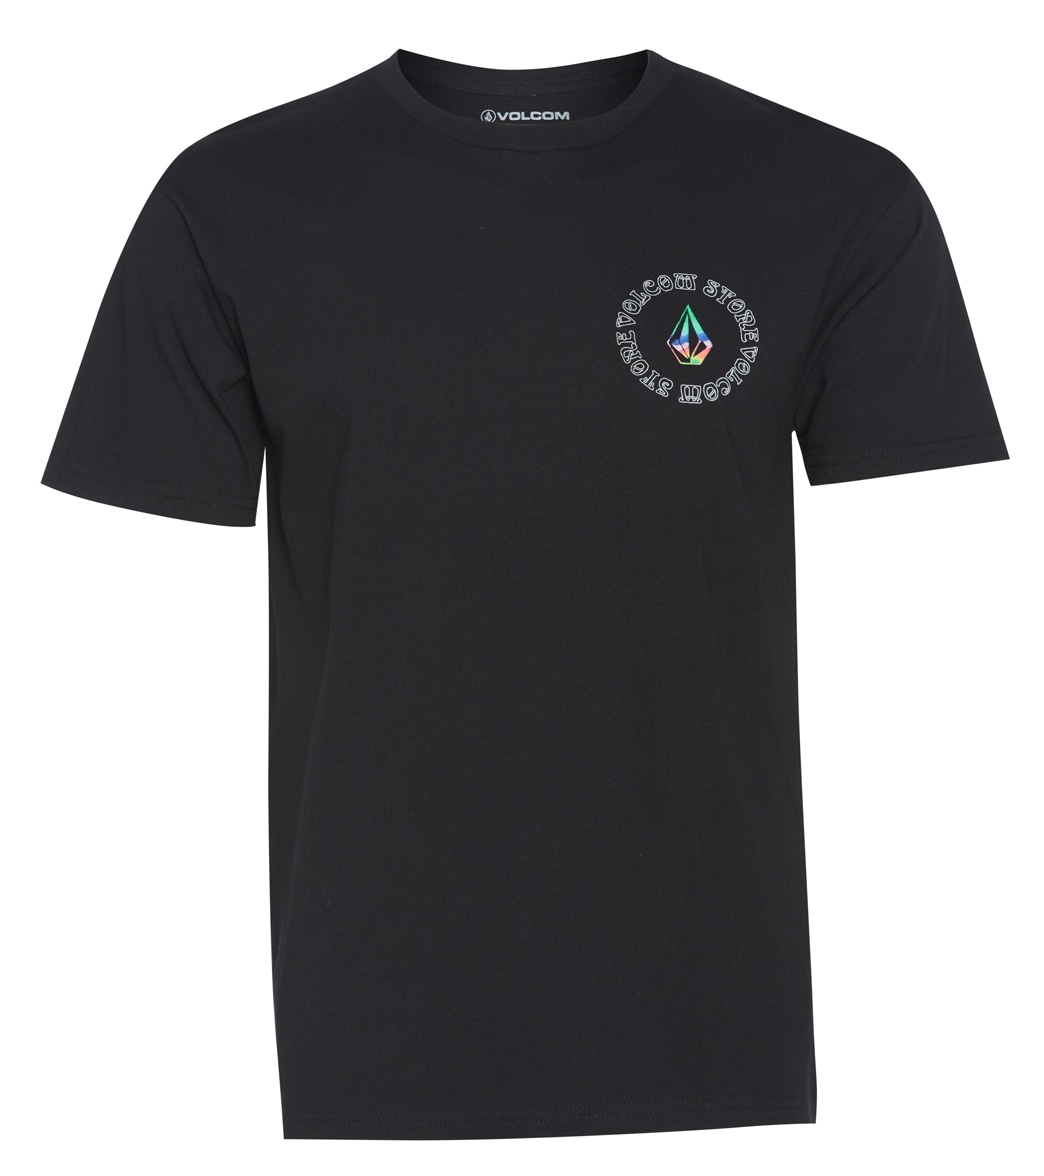 Volcom Men's Star Shields Short Sleeve Tee Shirt - Black Large Cotton - Swimoutlet.com